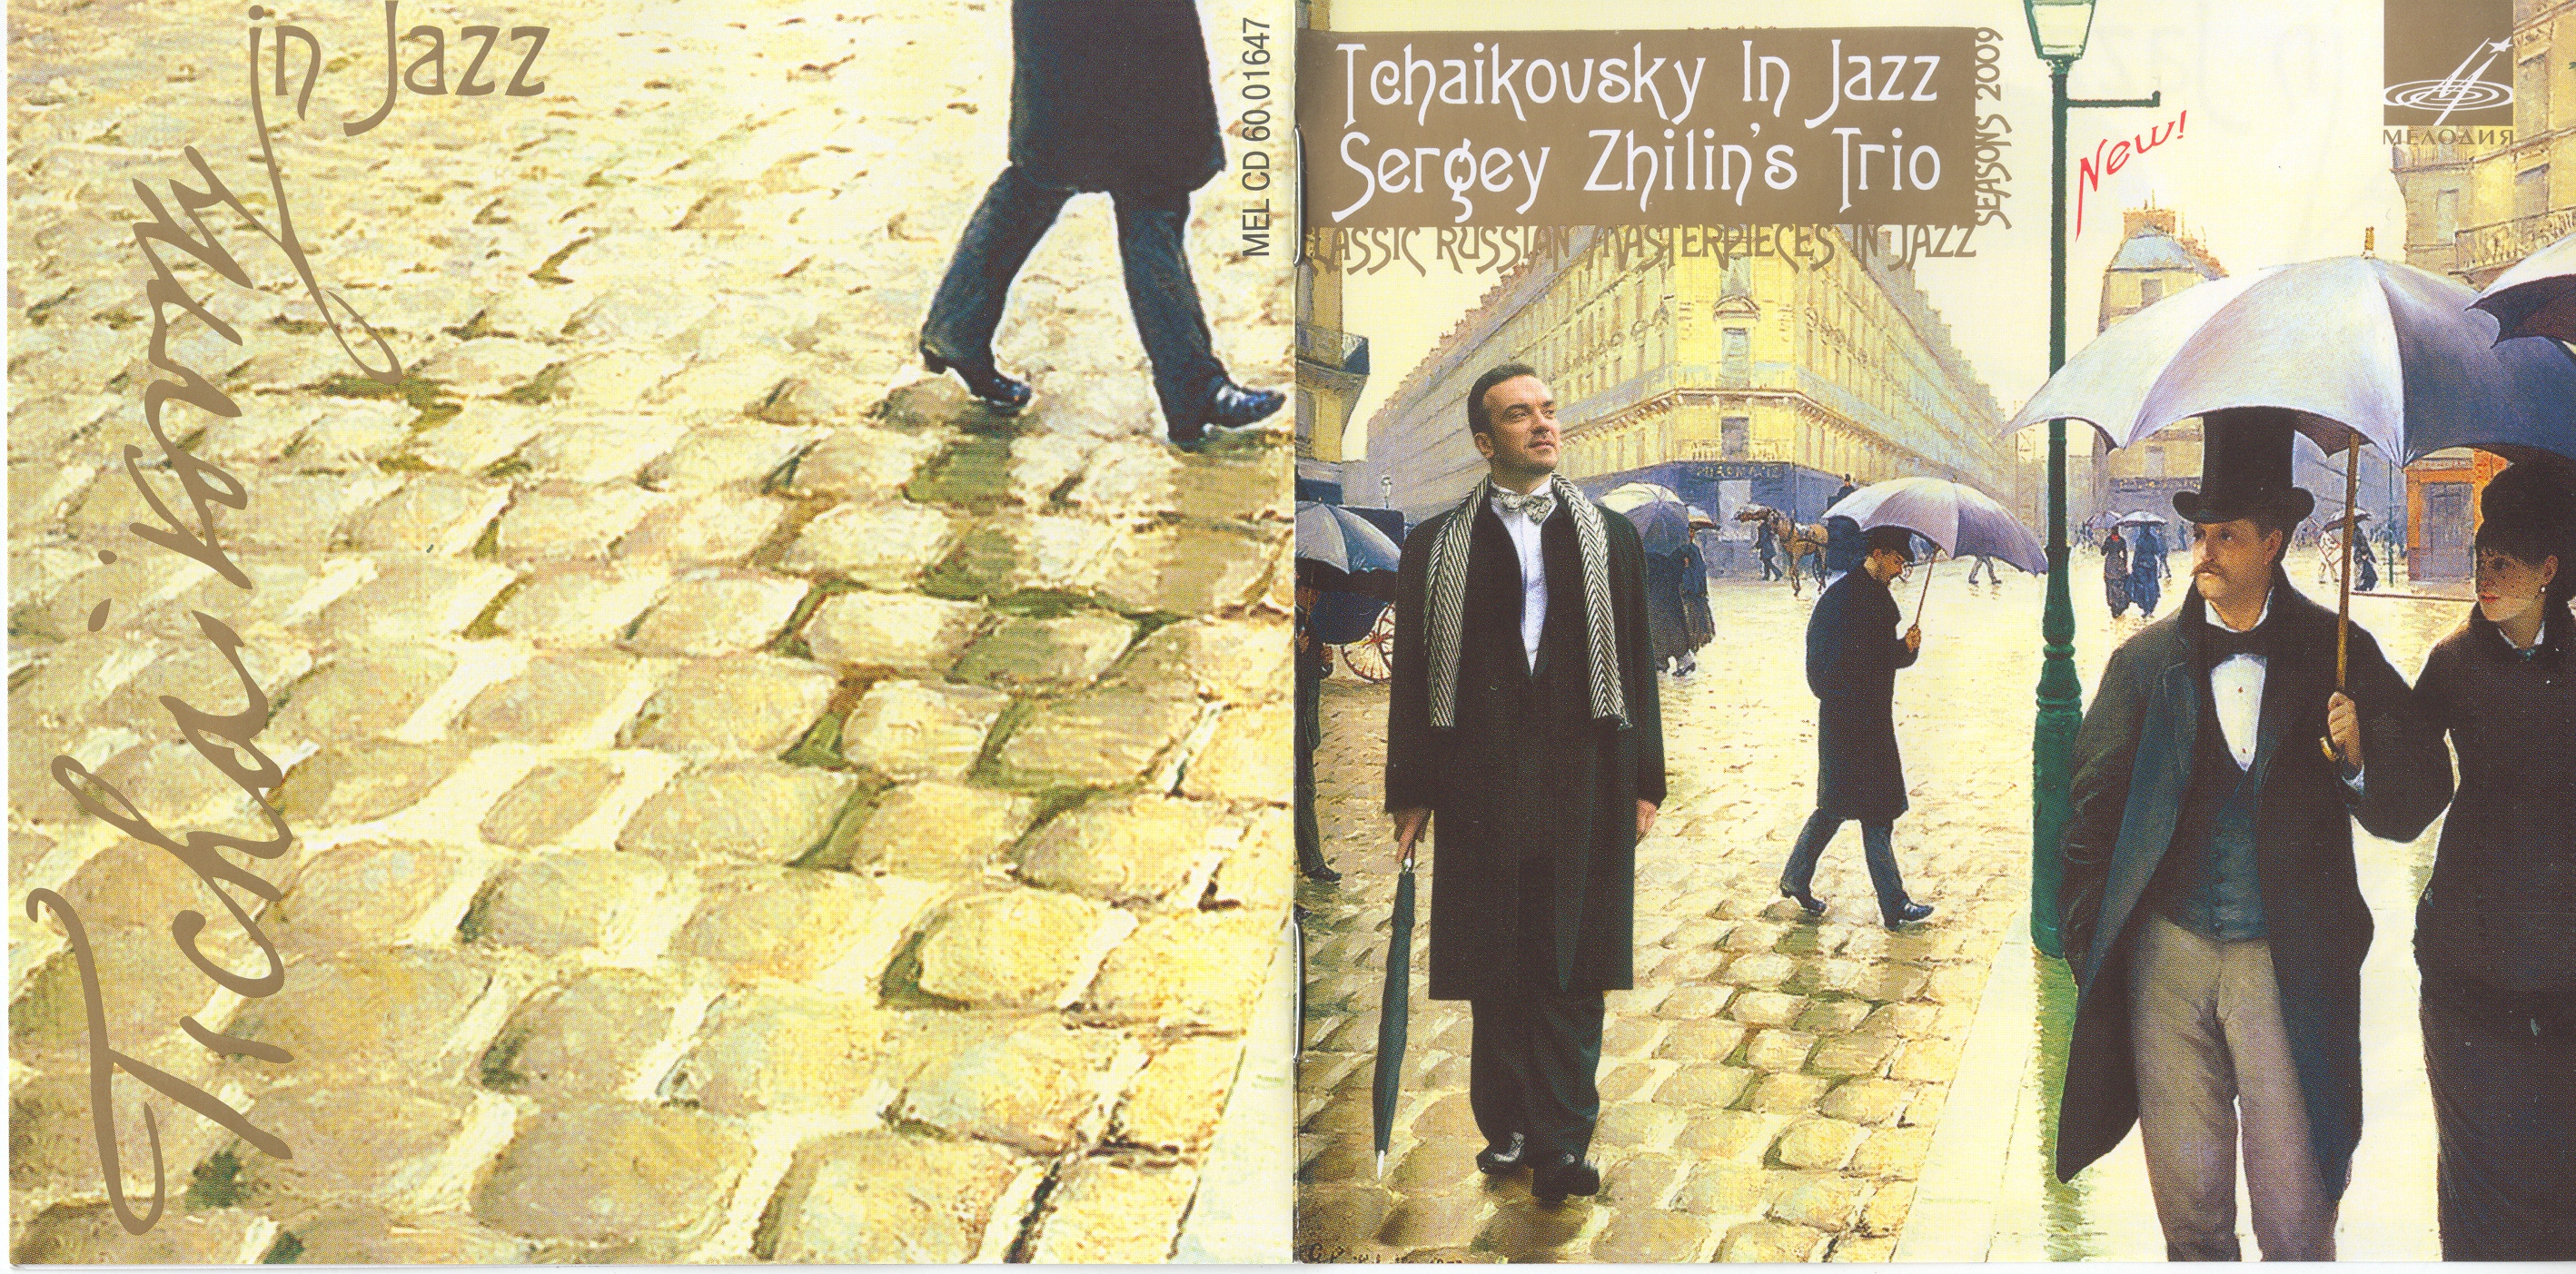 Трио Сергея Жилина - Tchaikovsky In Jazz. Seasons 2009